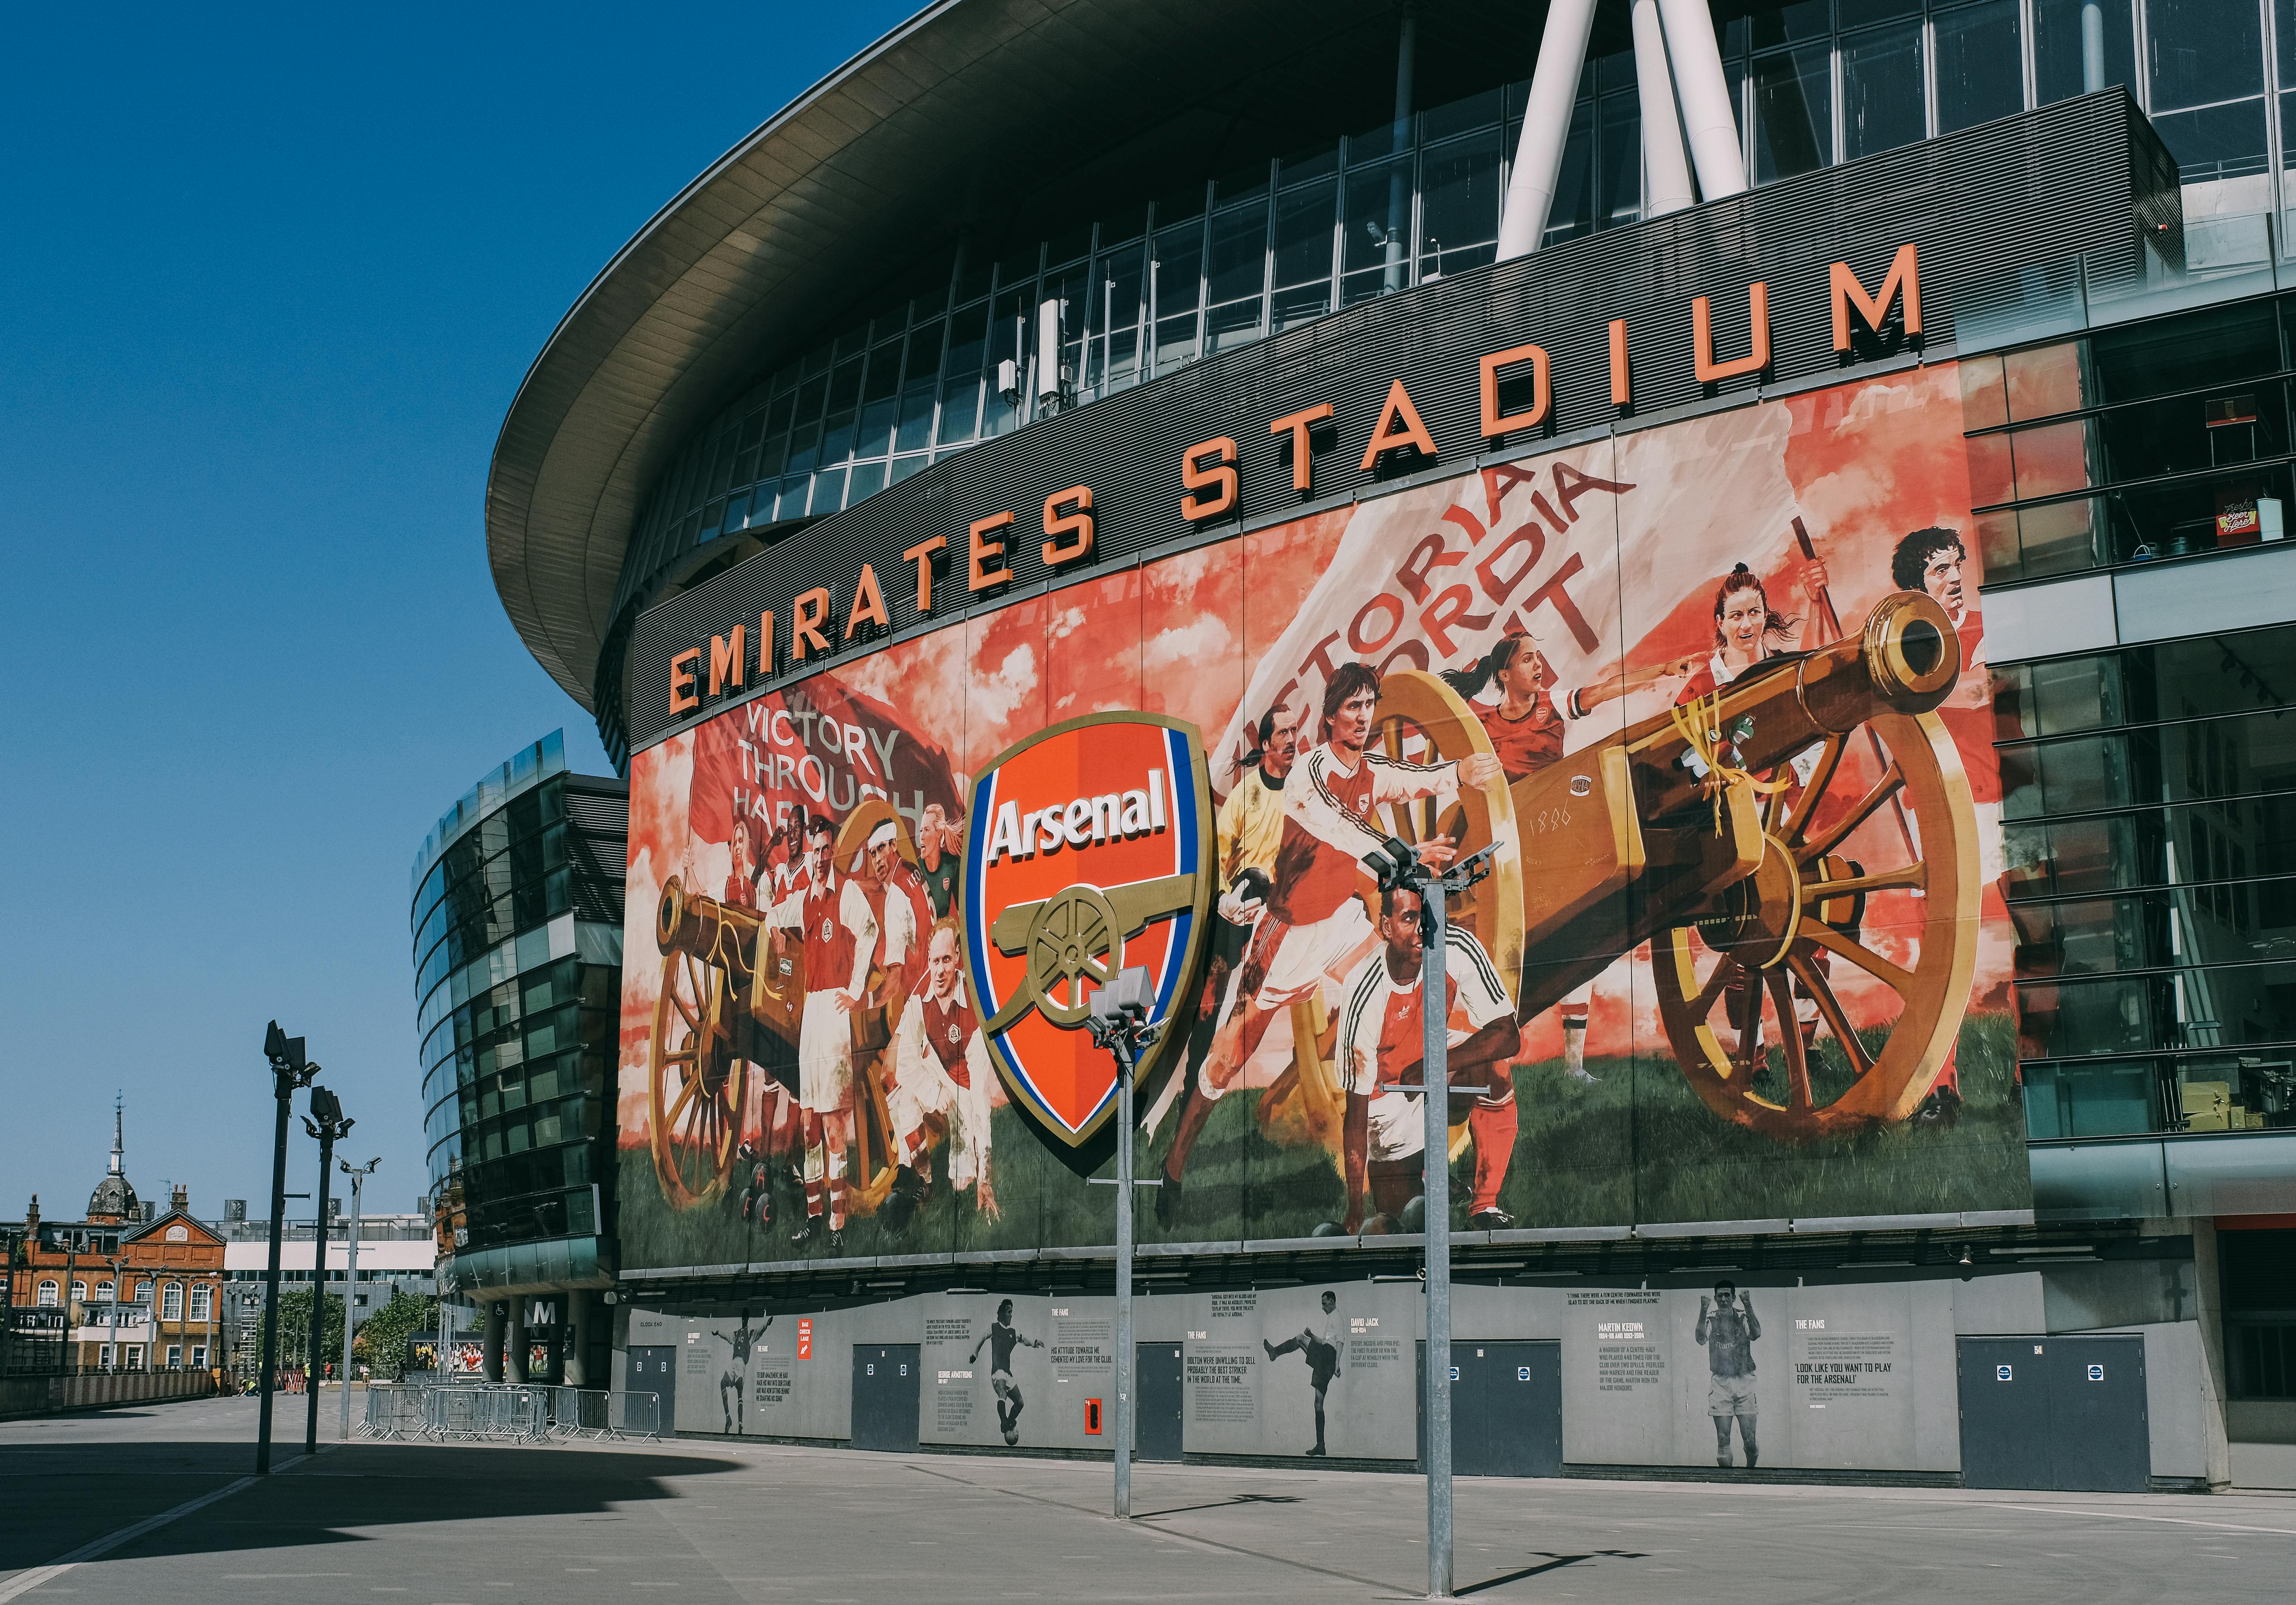 Arsenal iPhone HD phone wallpaper | Pxfuel